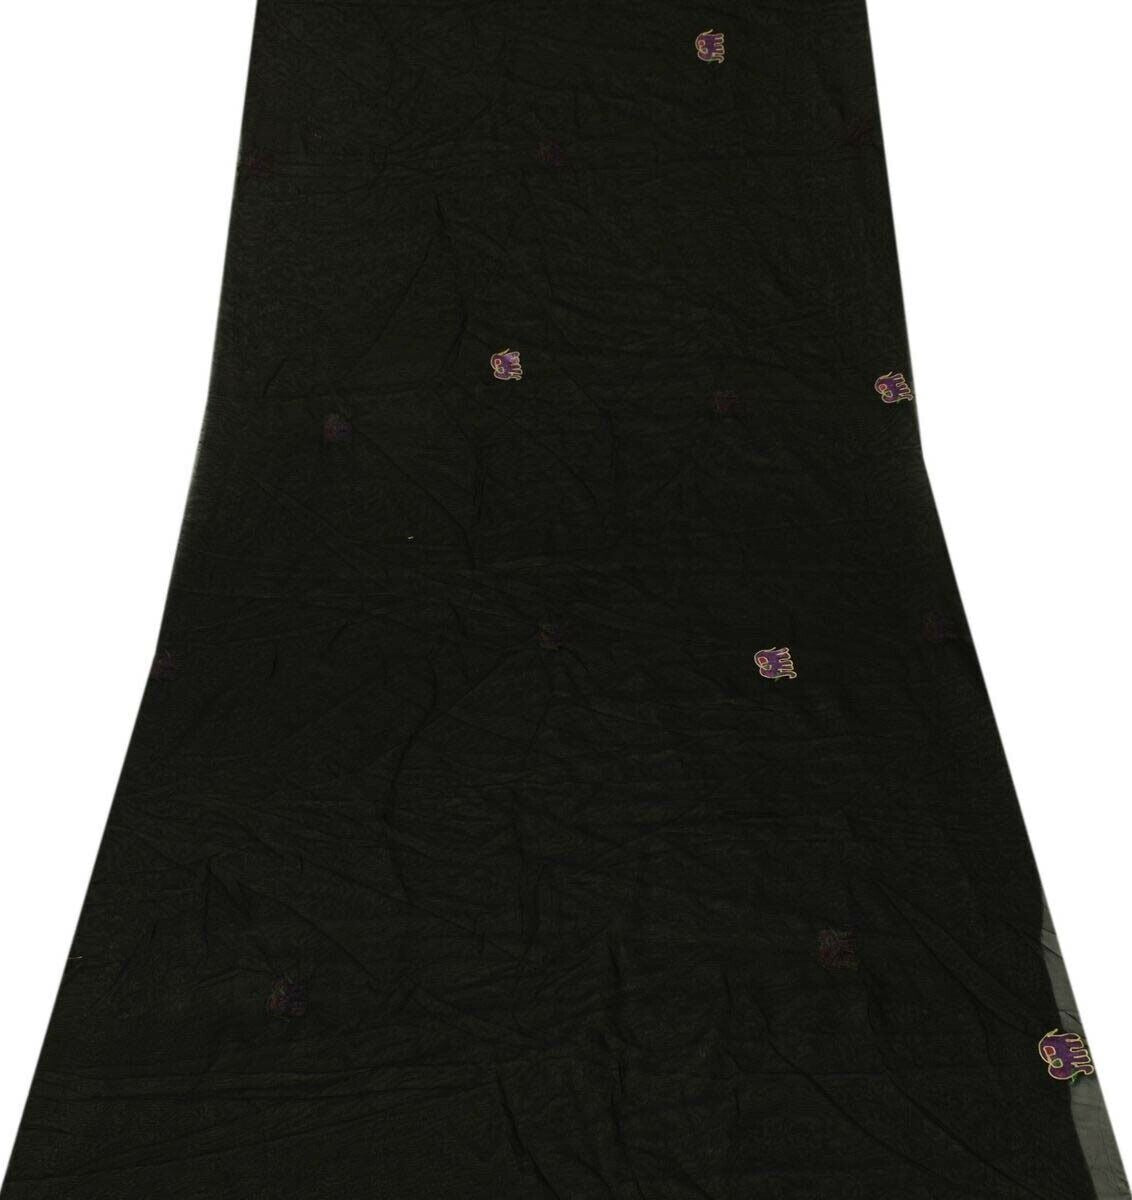 Indian Art Silk Black Vintage Sari Remnant Scrap Fabric for Sewing Craft